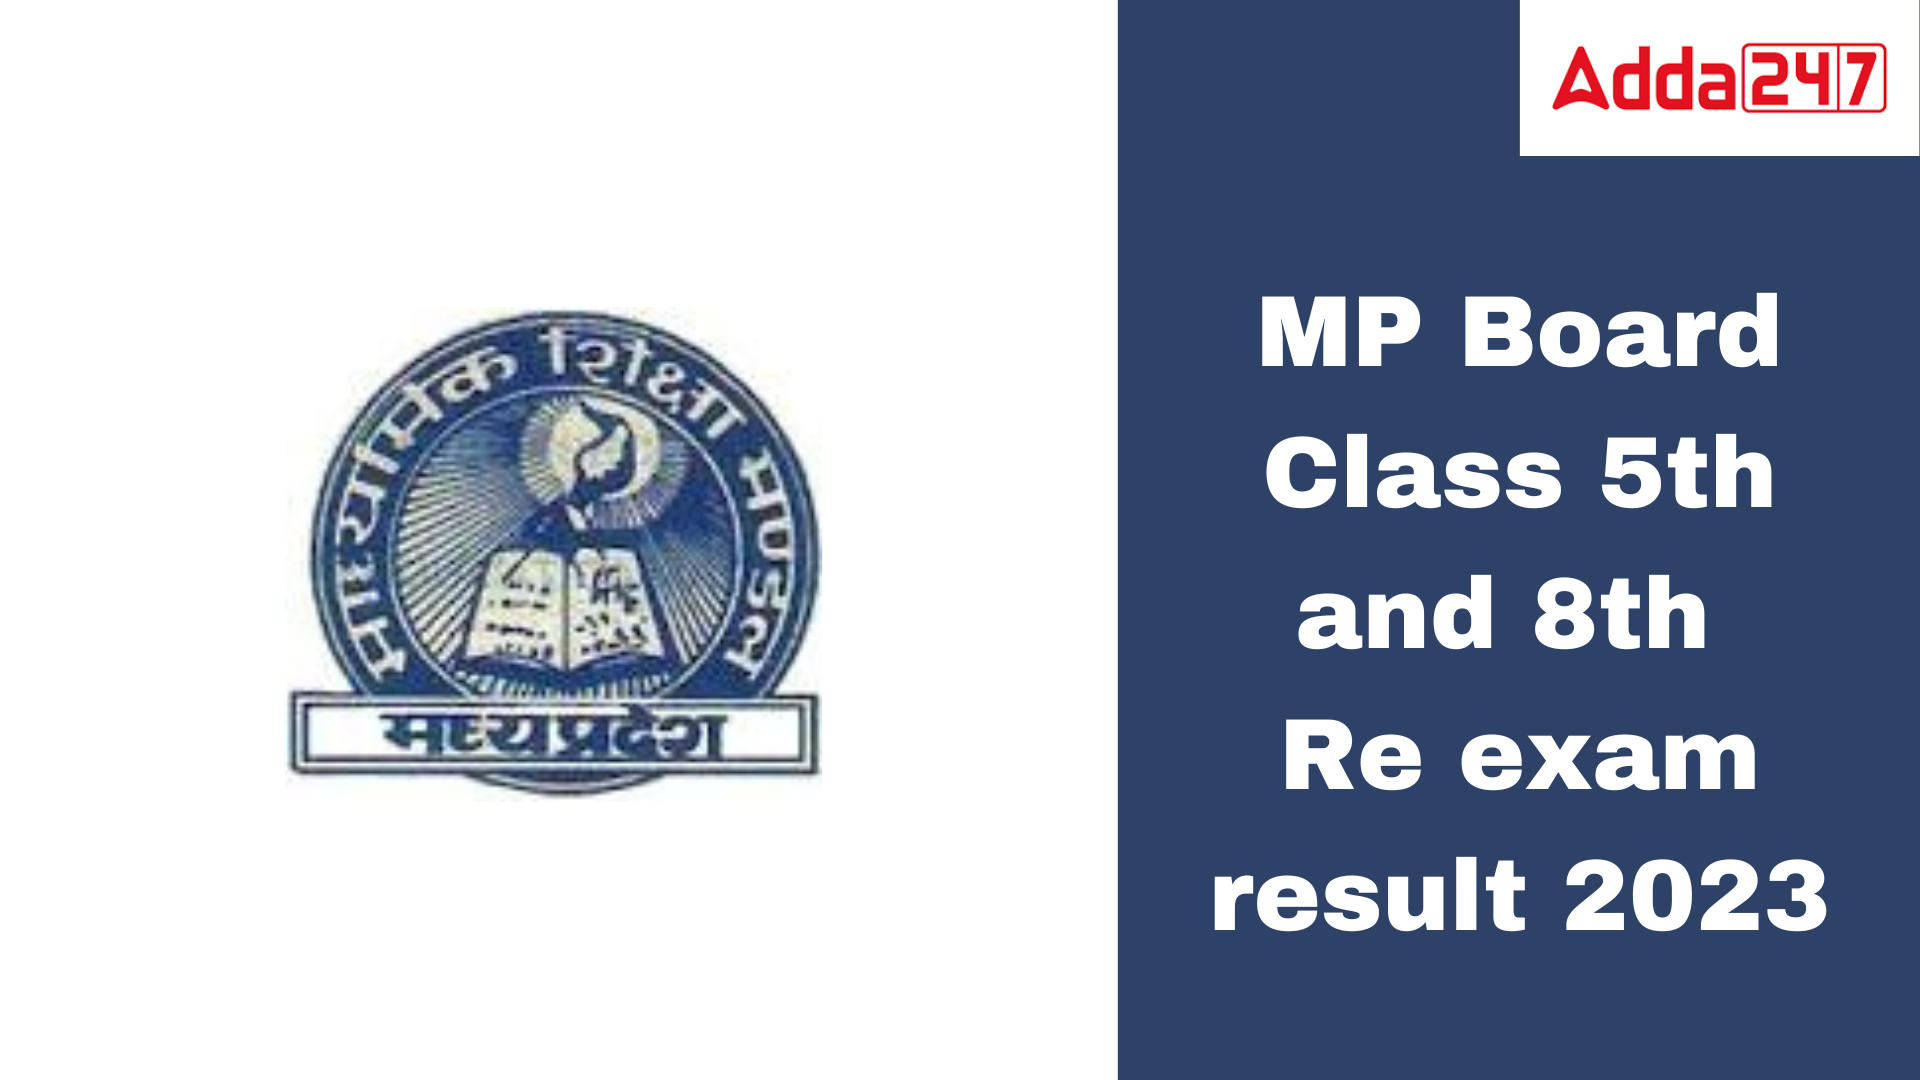 MP Board Class 5th & 8th Re exam result 2023